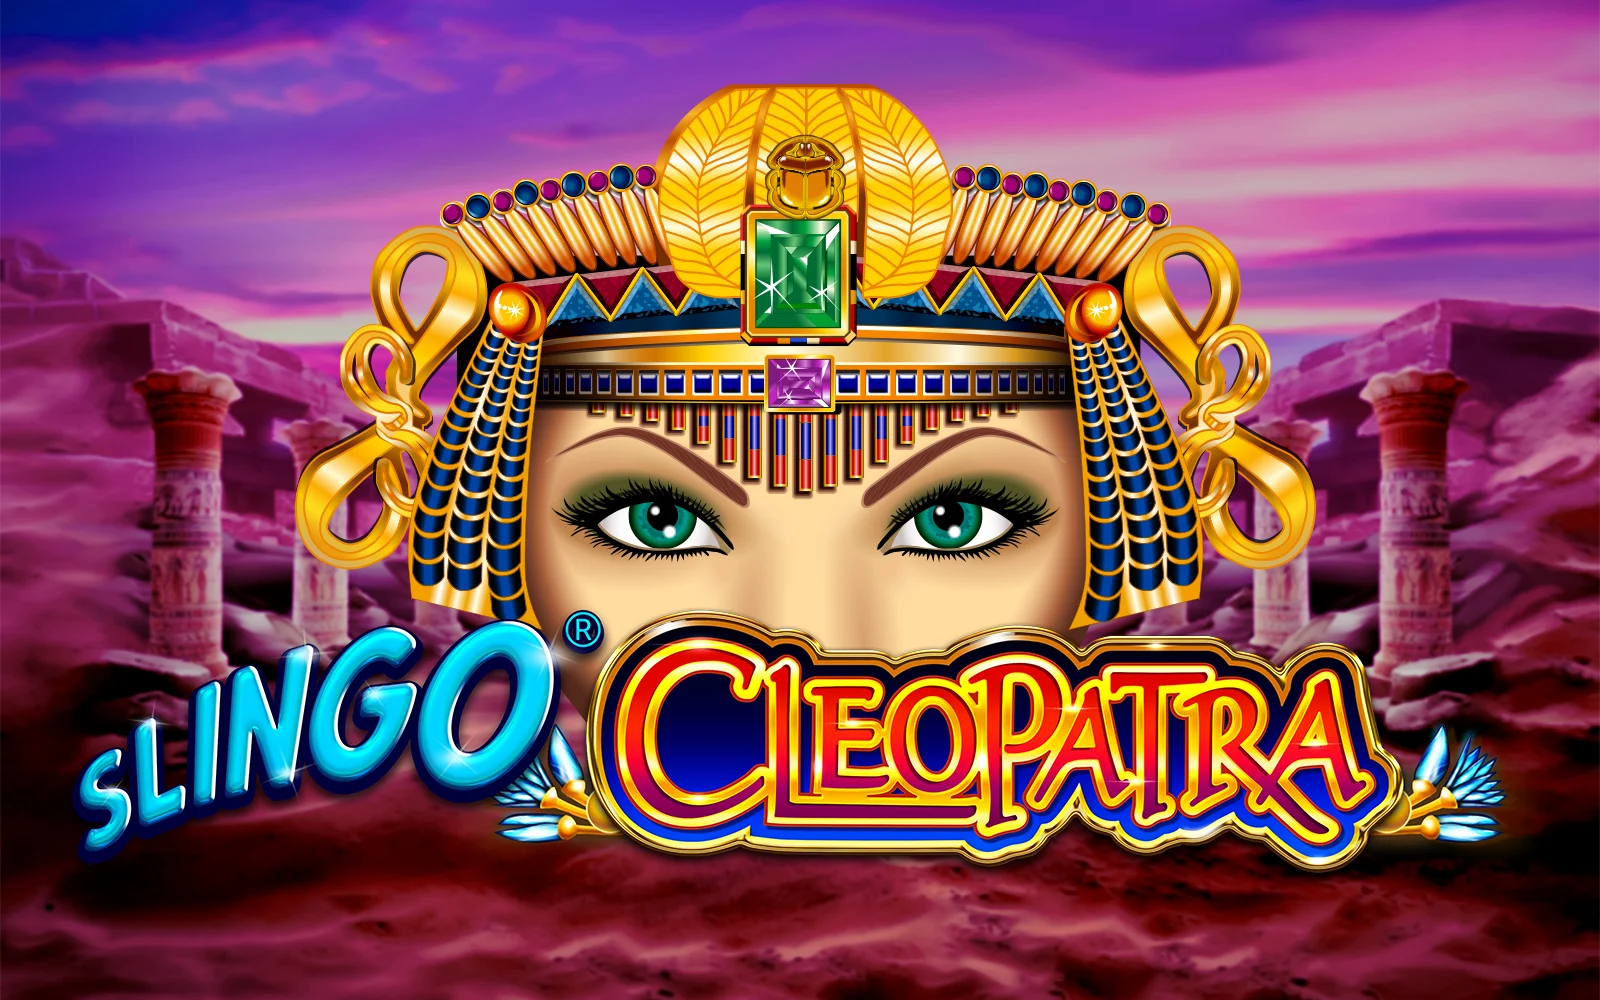 Play Slingo Cleopatra on Starcasino.be online casino